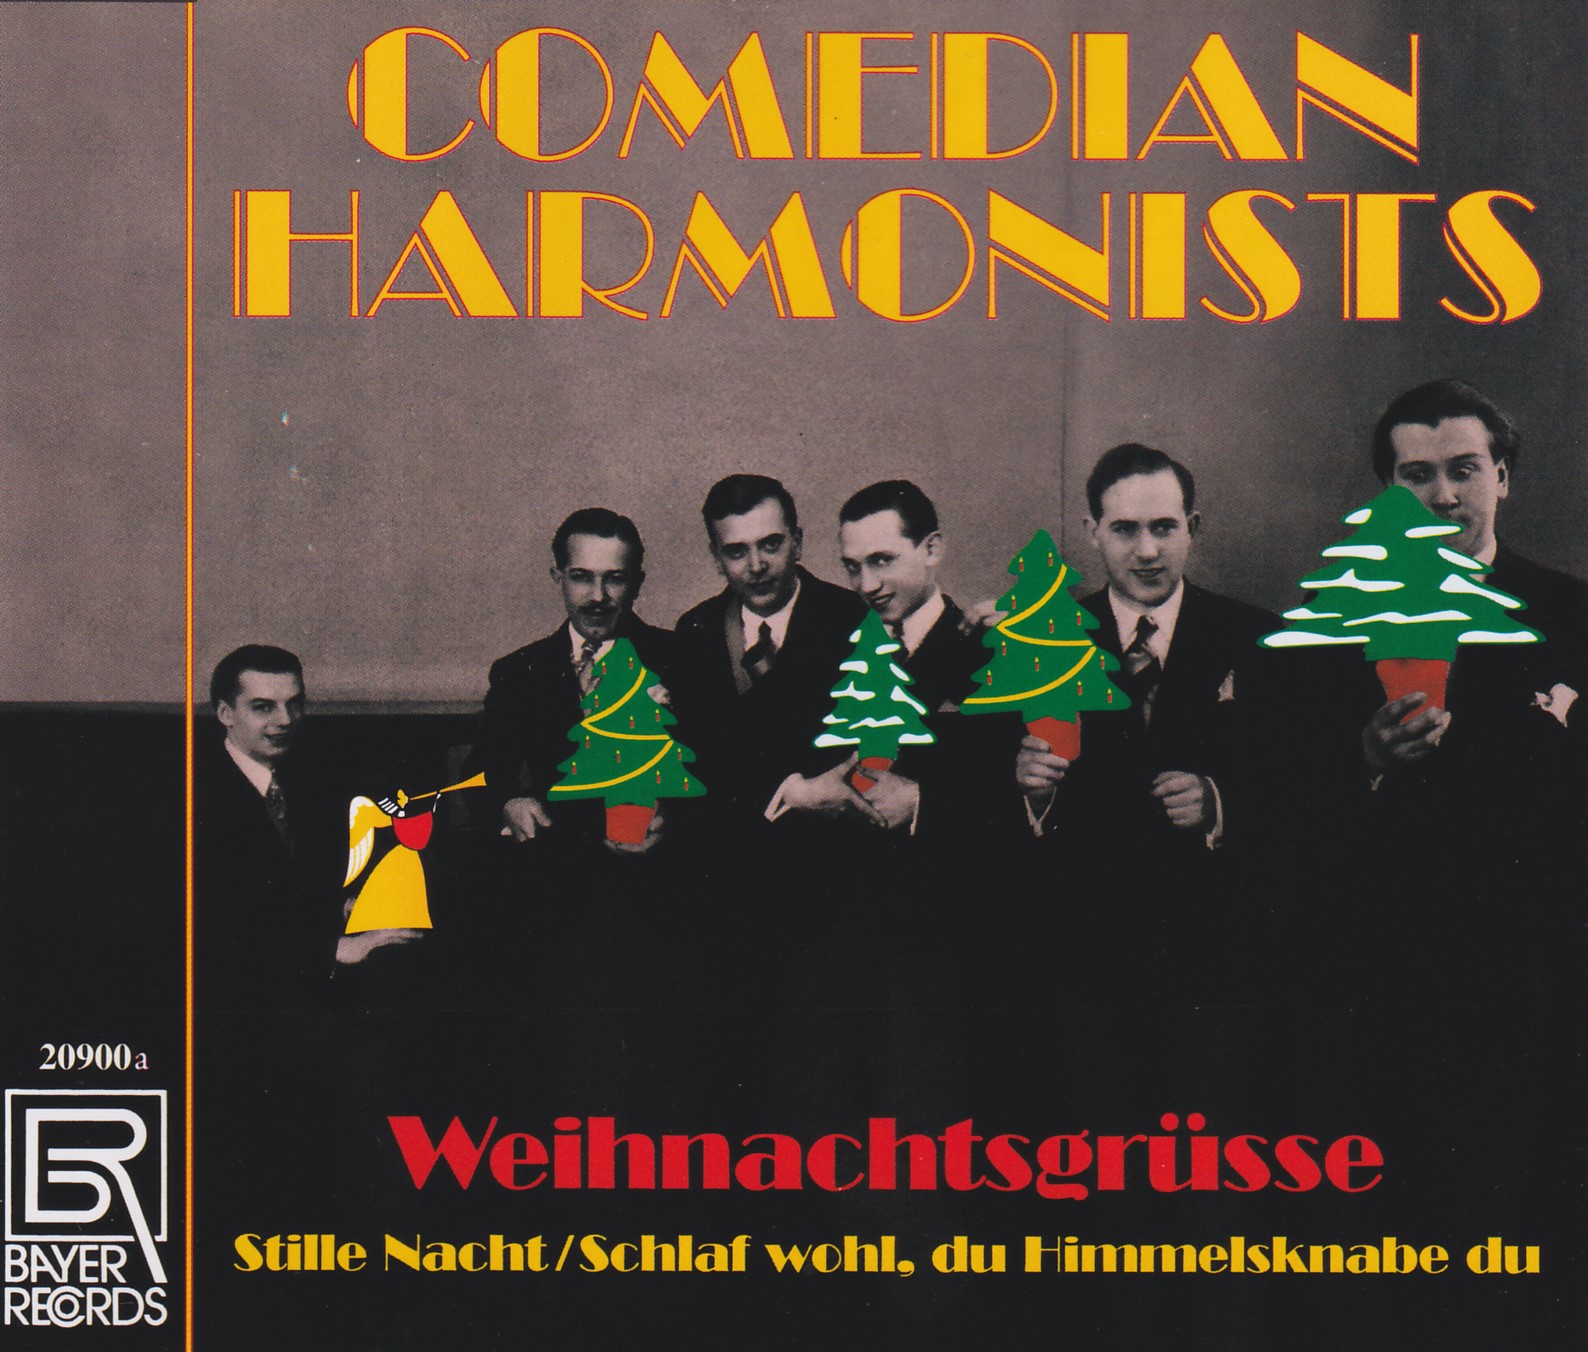 Comedian Harmonists - Weihnachtsgrüße